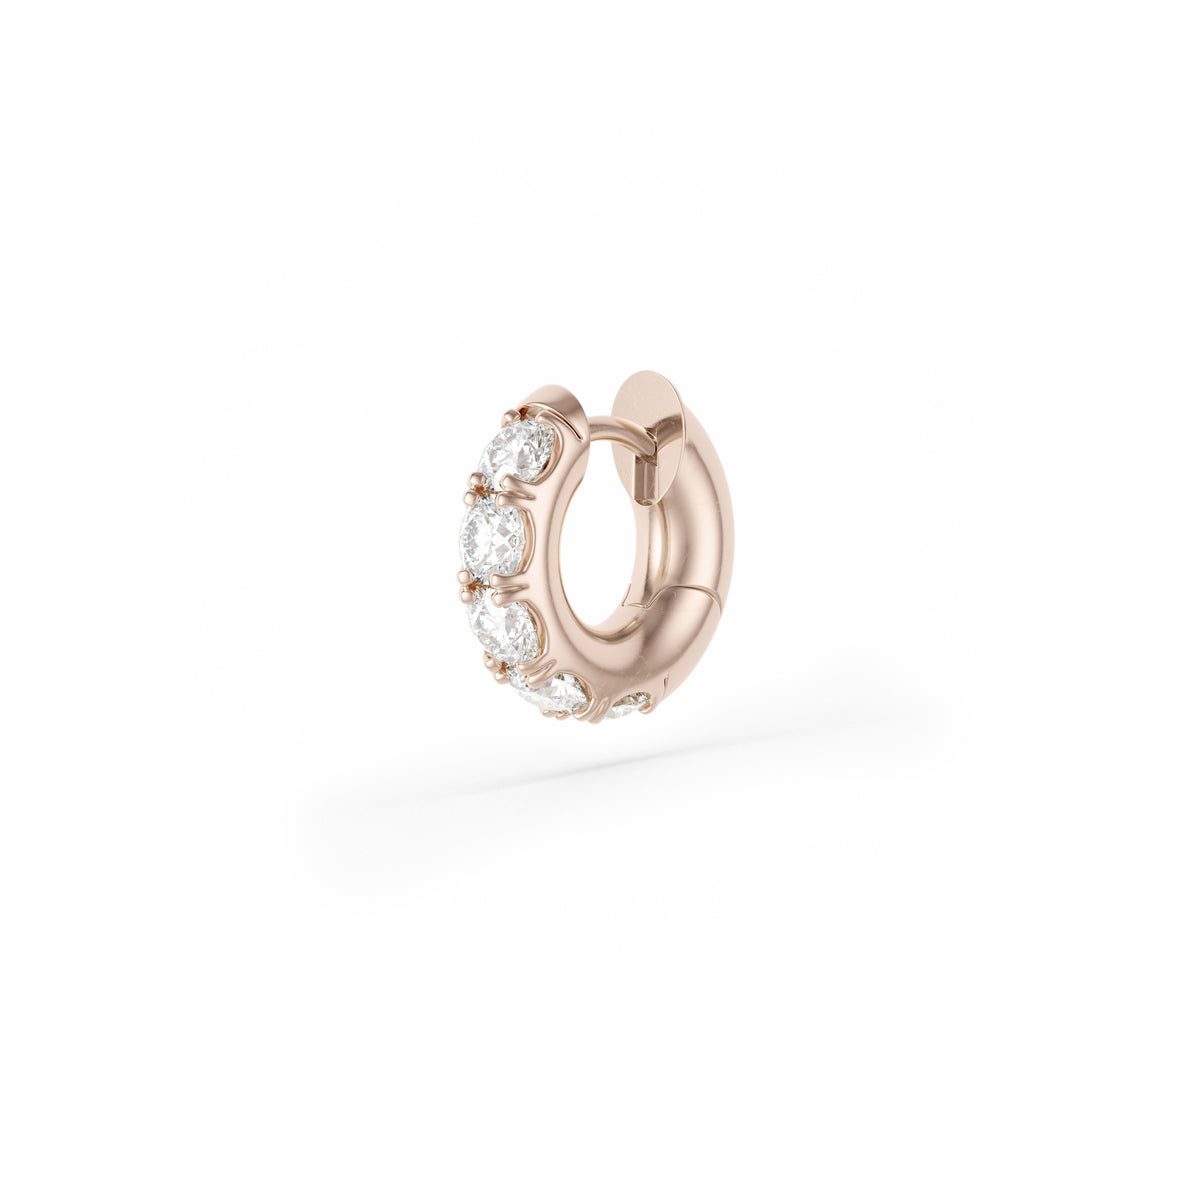 Mini Macrohoop 18k rose gold white diamond earrings